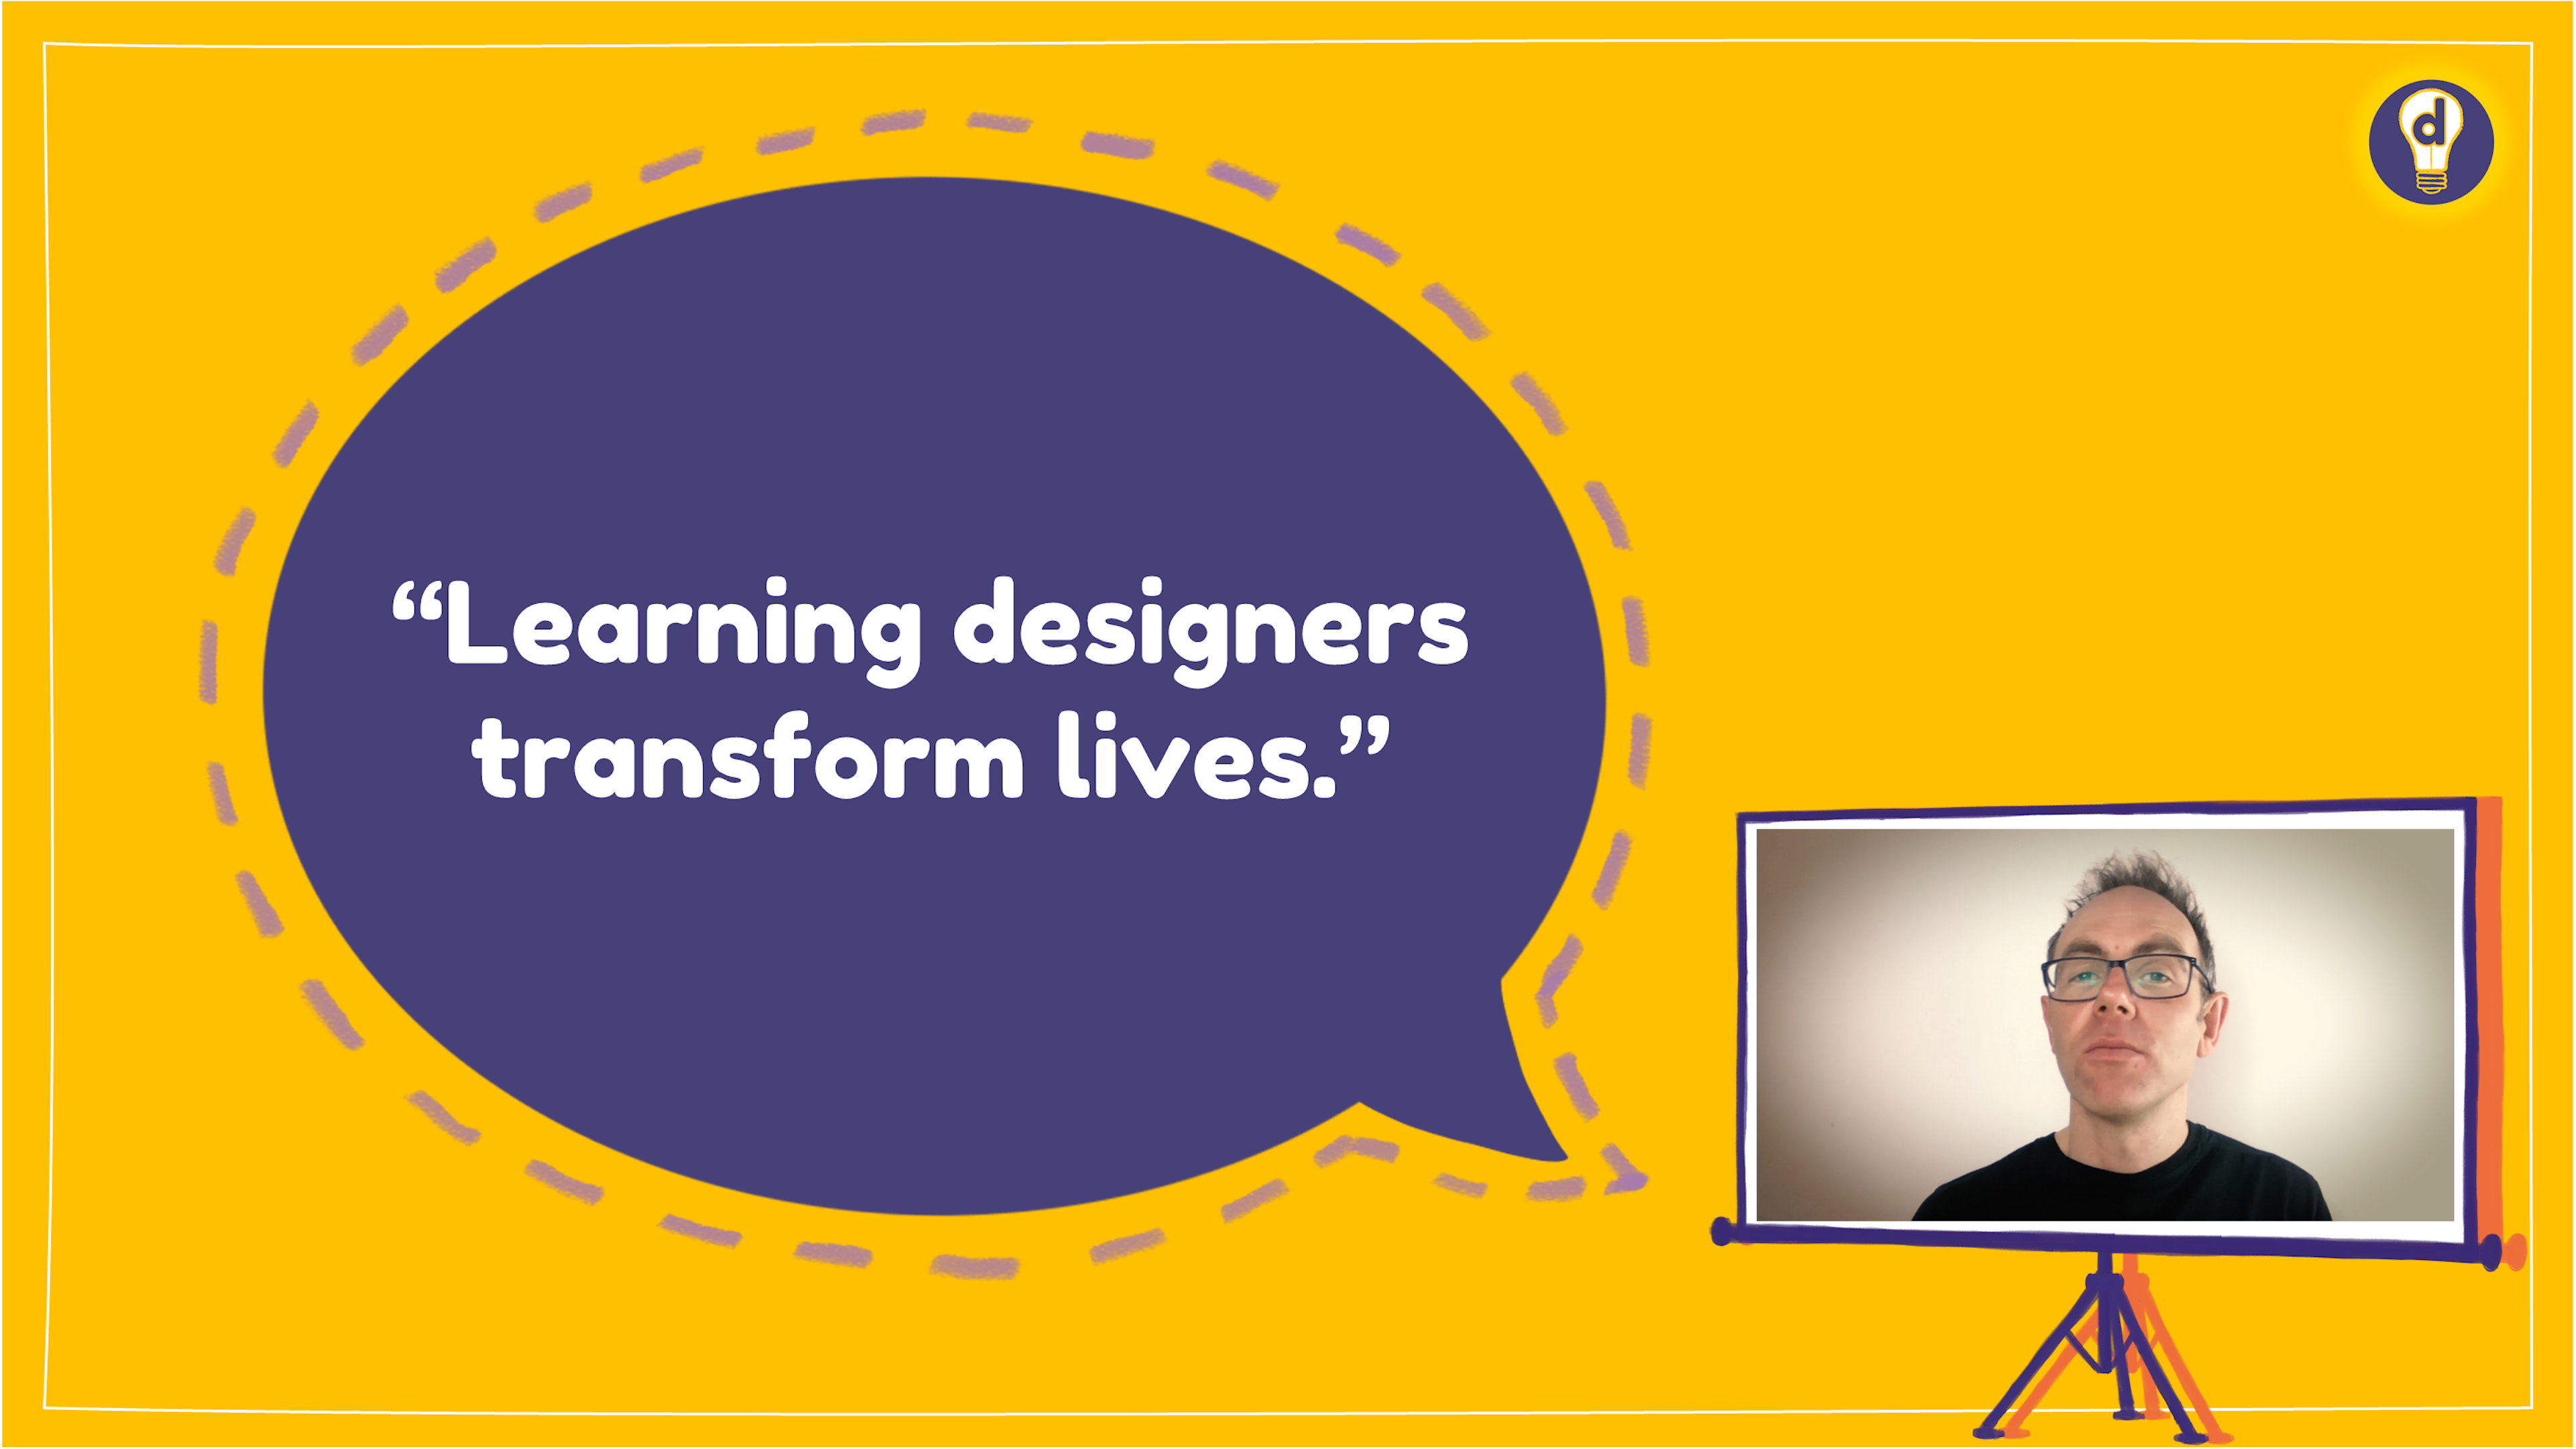 Ding! Learning Designers transform lives